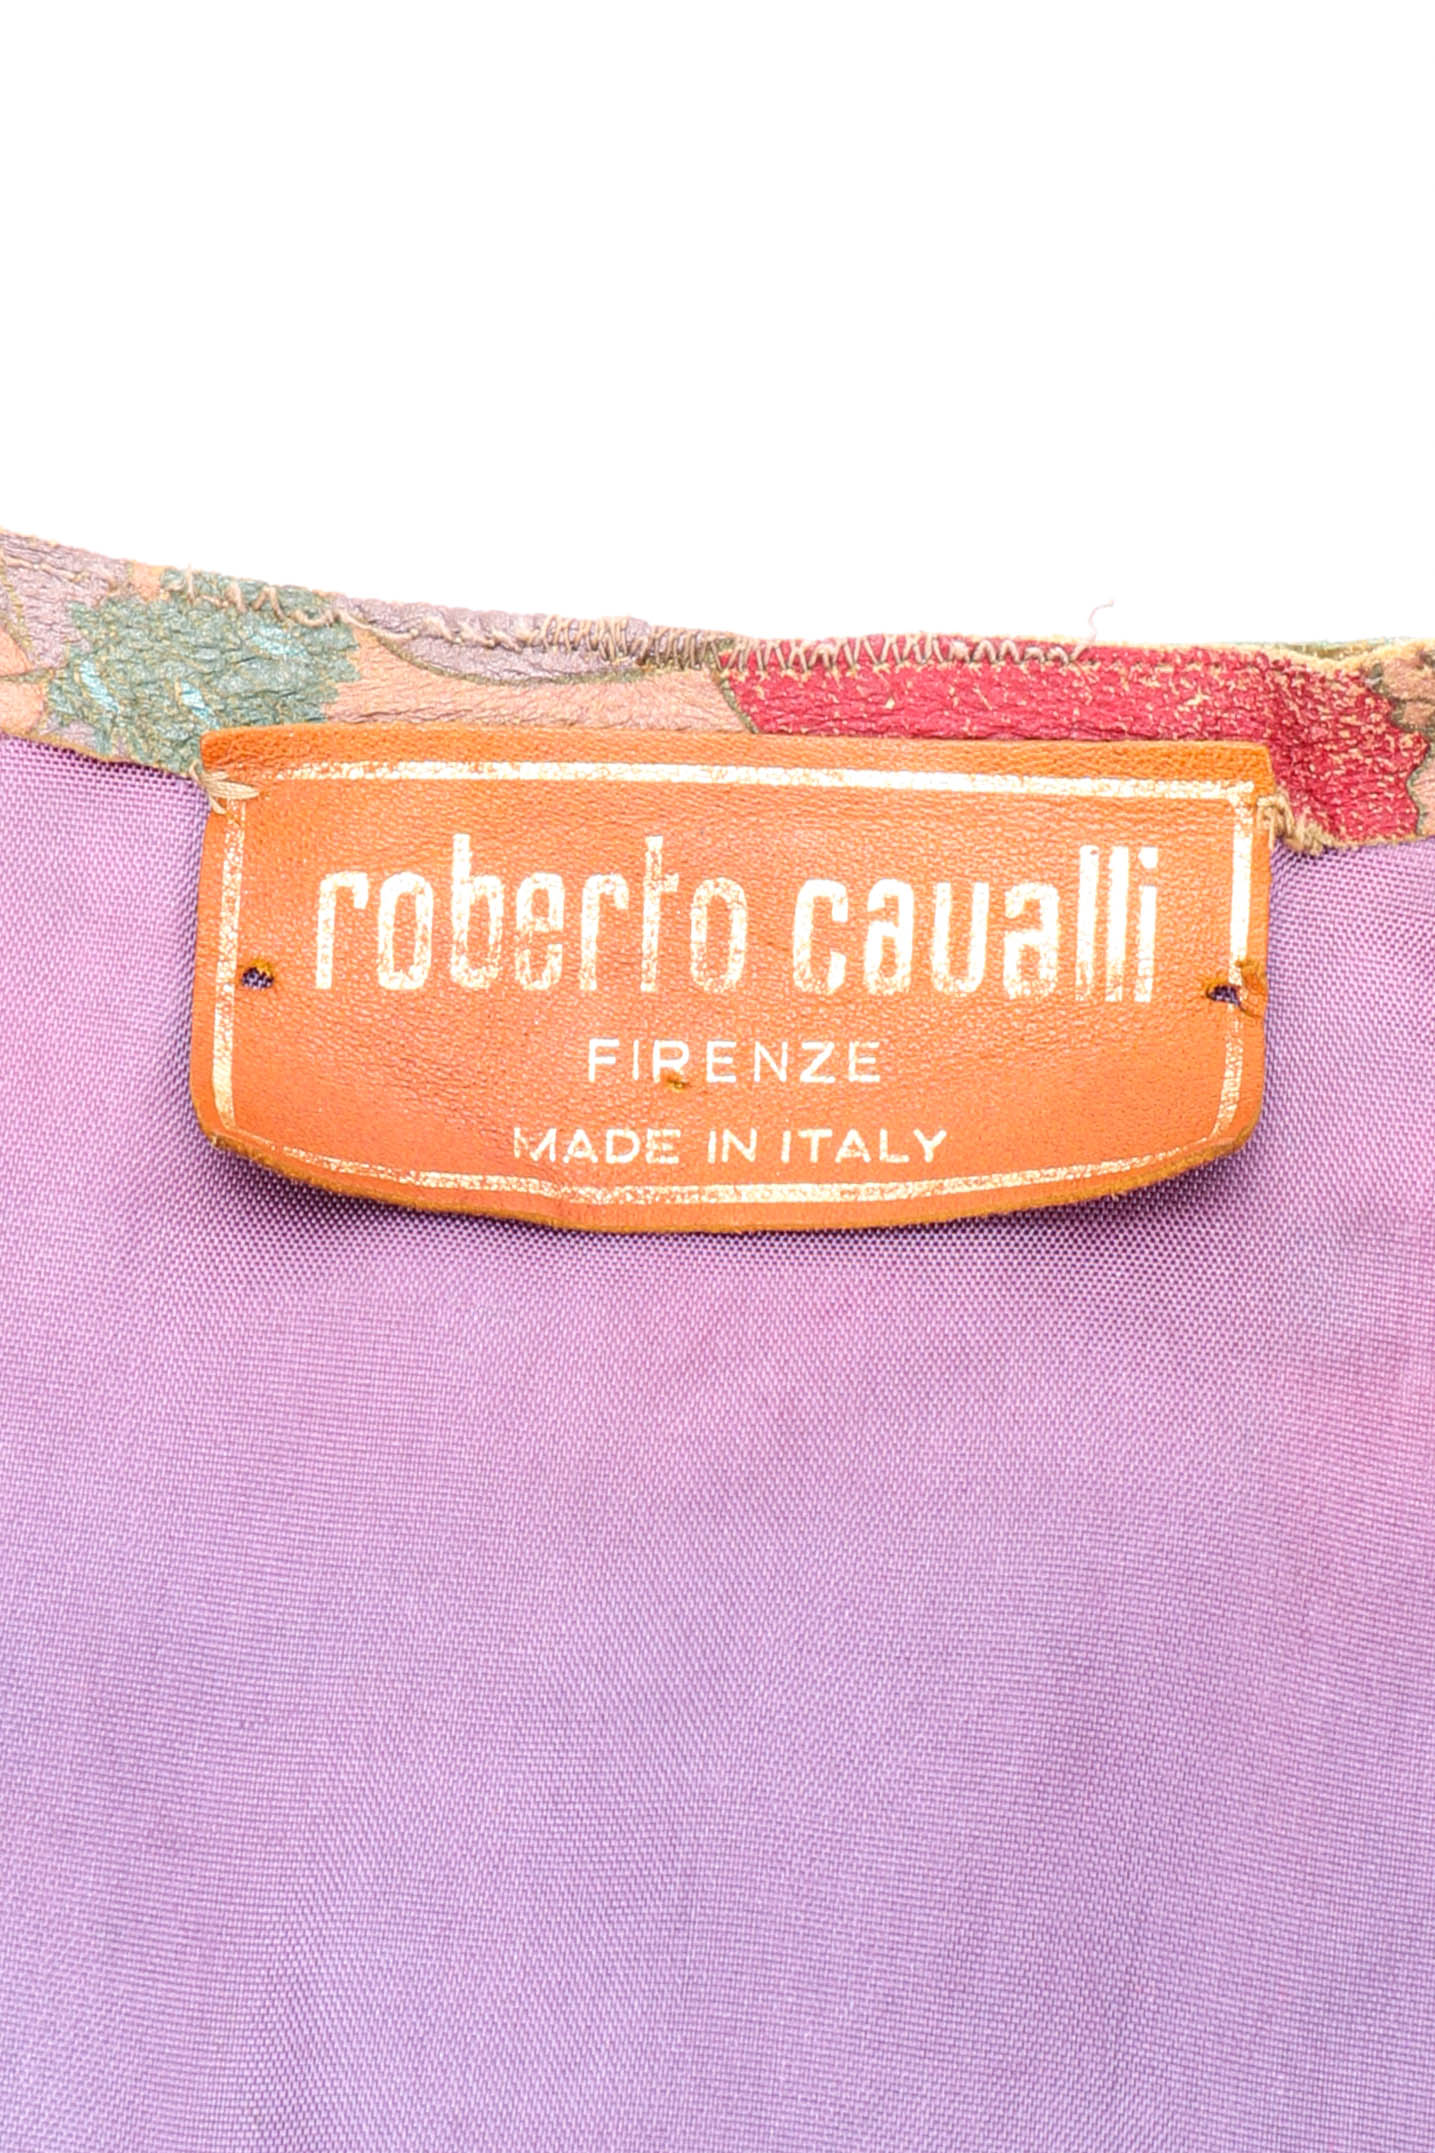 Vintage Roberto Cavalli Floral Denim and Leather Fringe Jacket signature label closeup @recessla